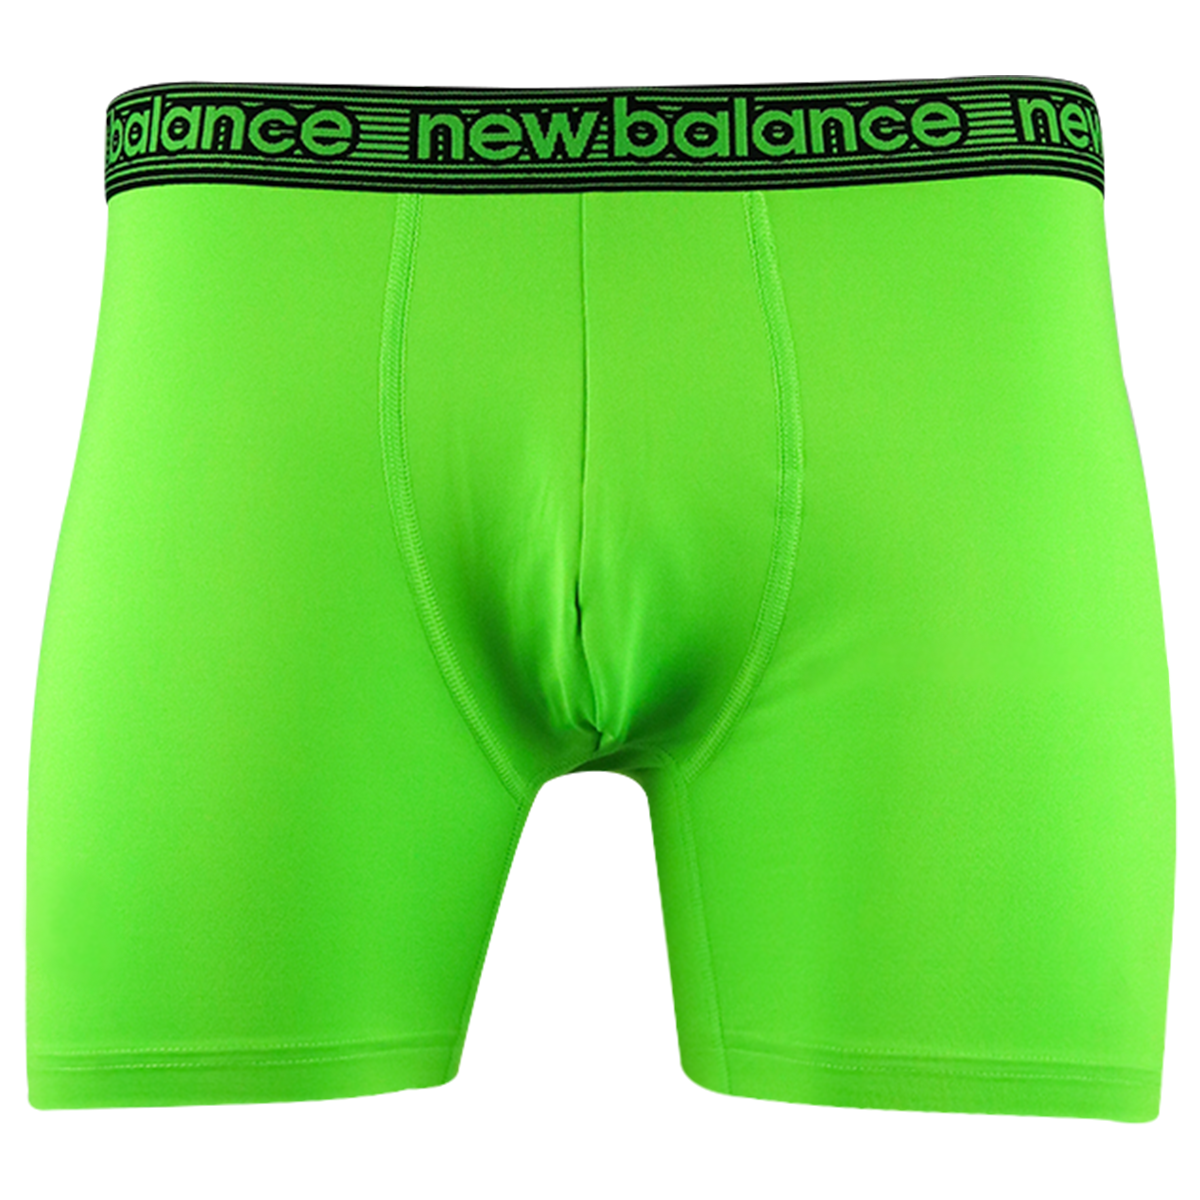 New Balance Men's Black, Neon Green, Striped Pattern 4 Pack Boxer Brief (S03)